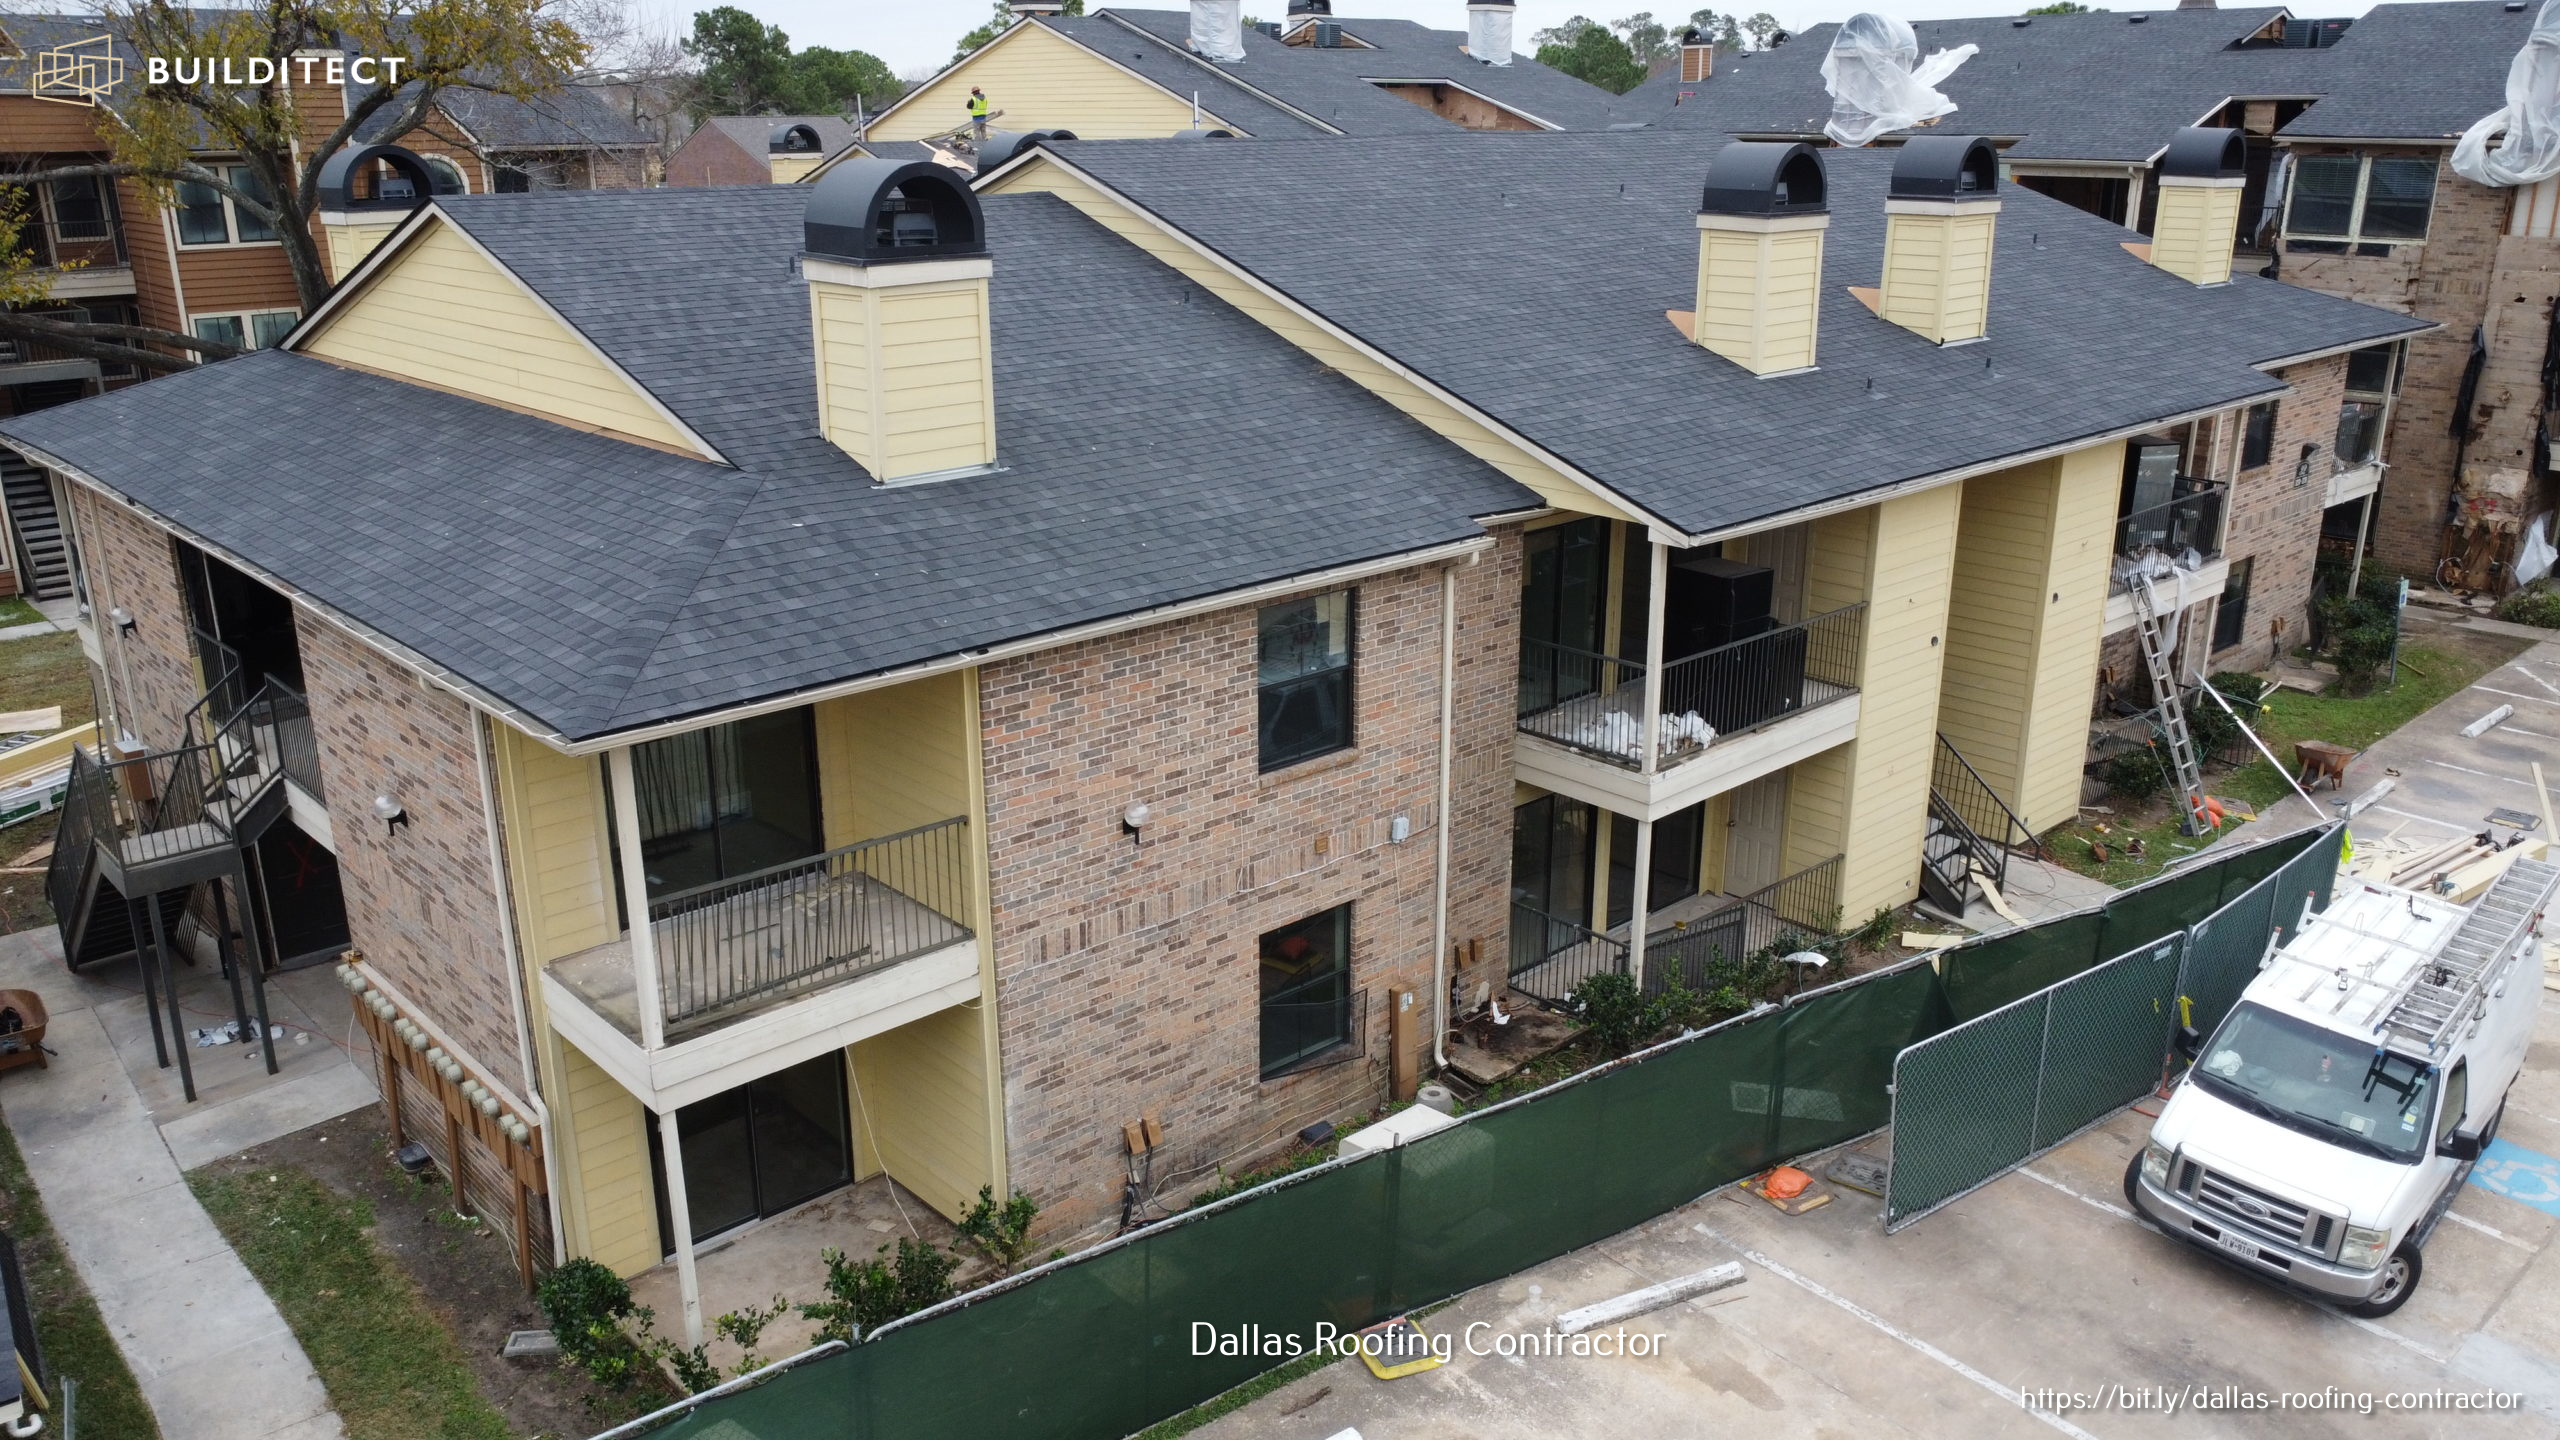 Builditect Roofing - Dallas Roofing Contractor Is A First-Rate Roofing Contractor In Dallas, TX.